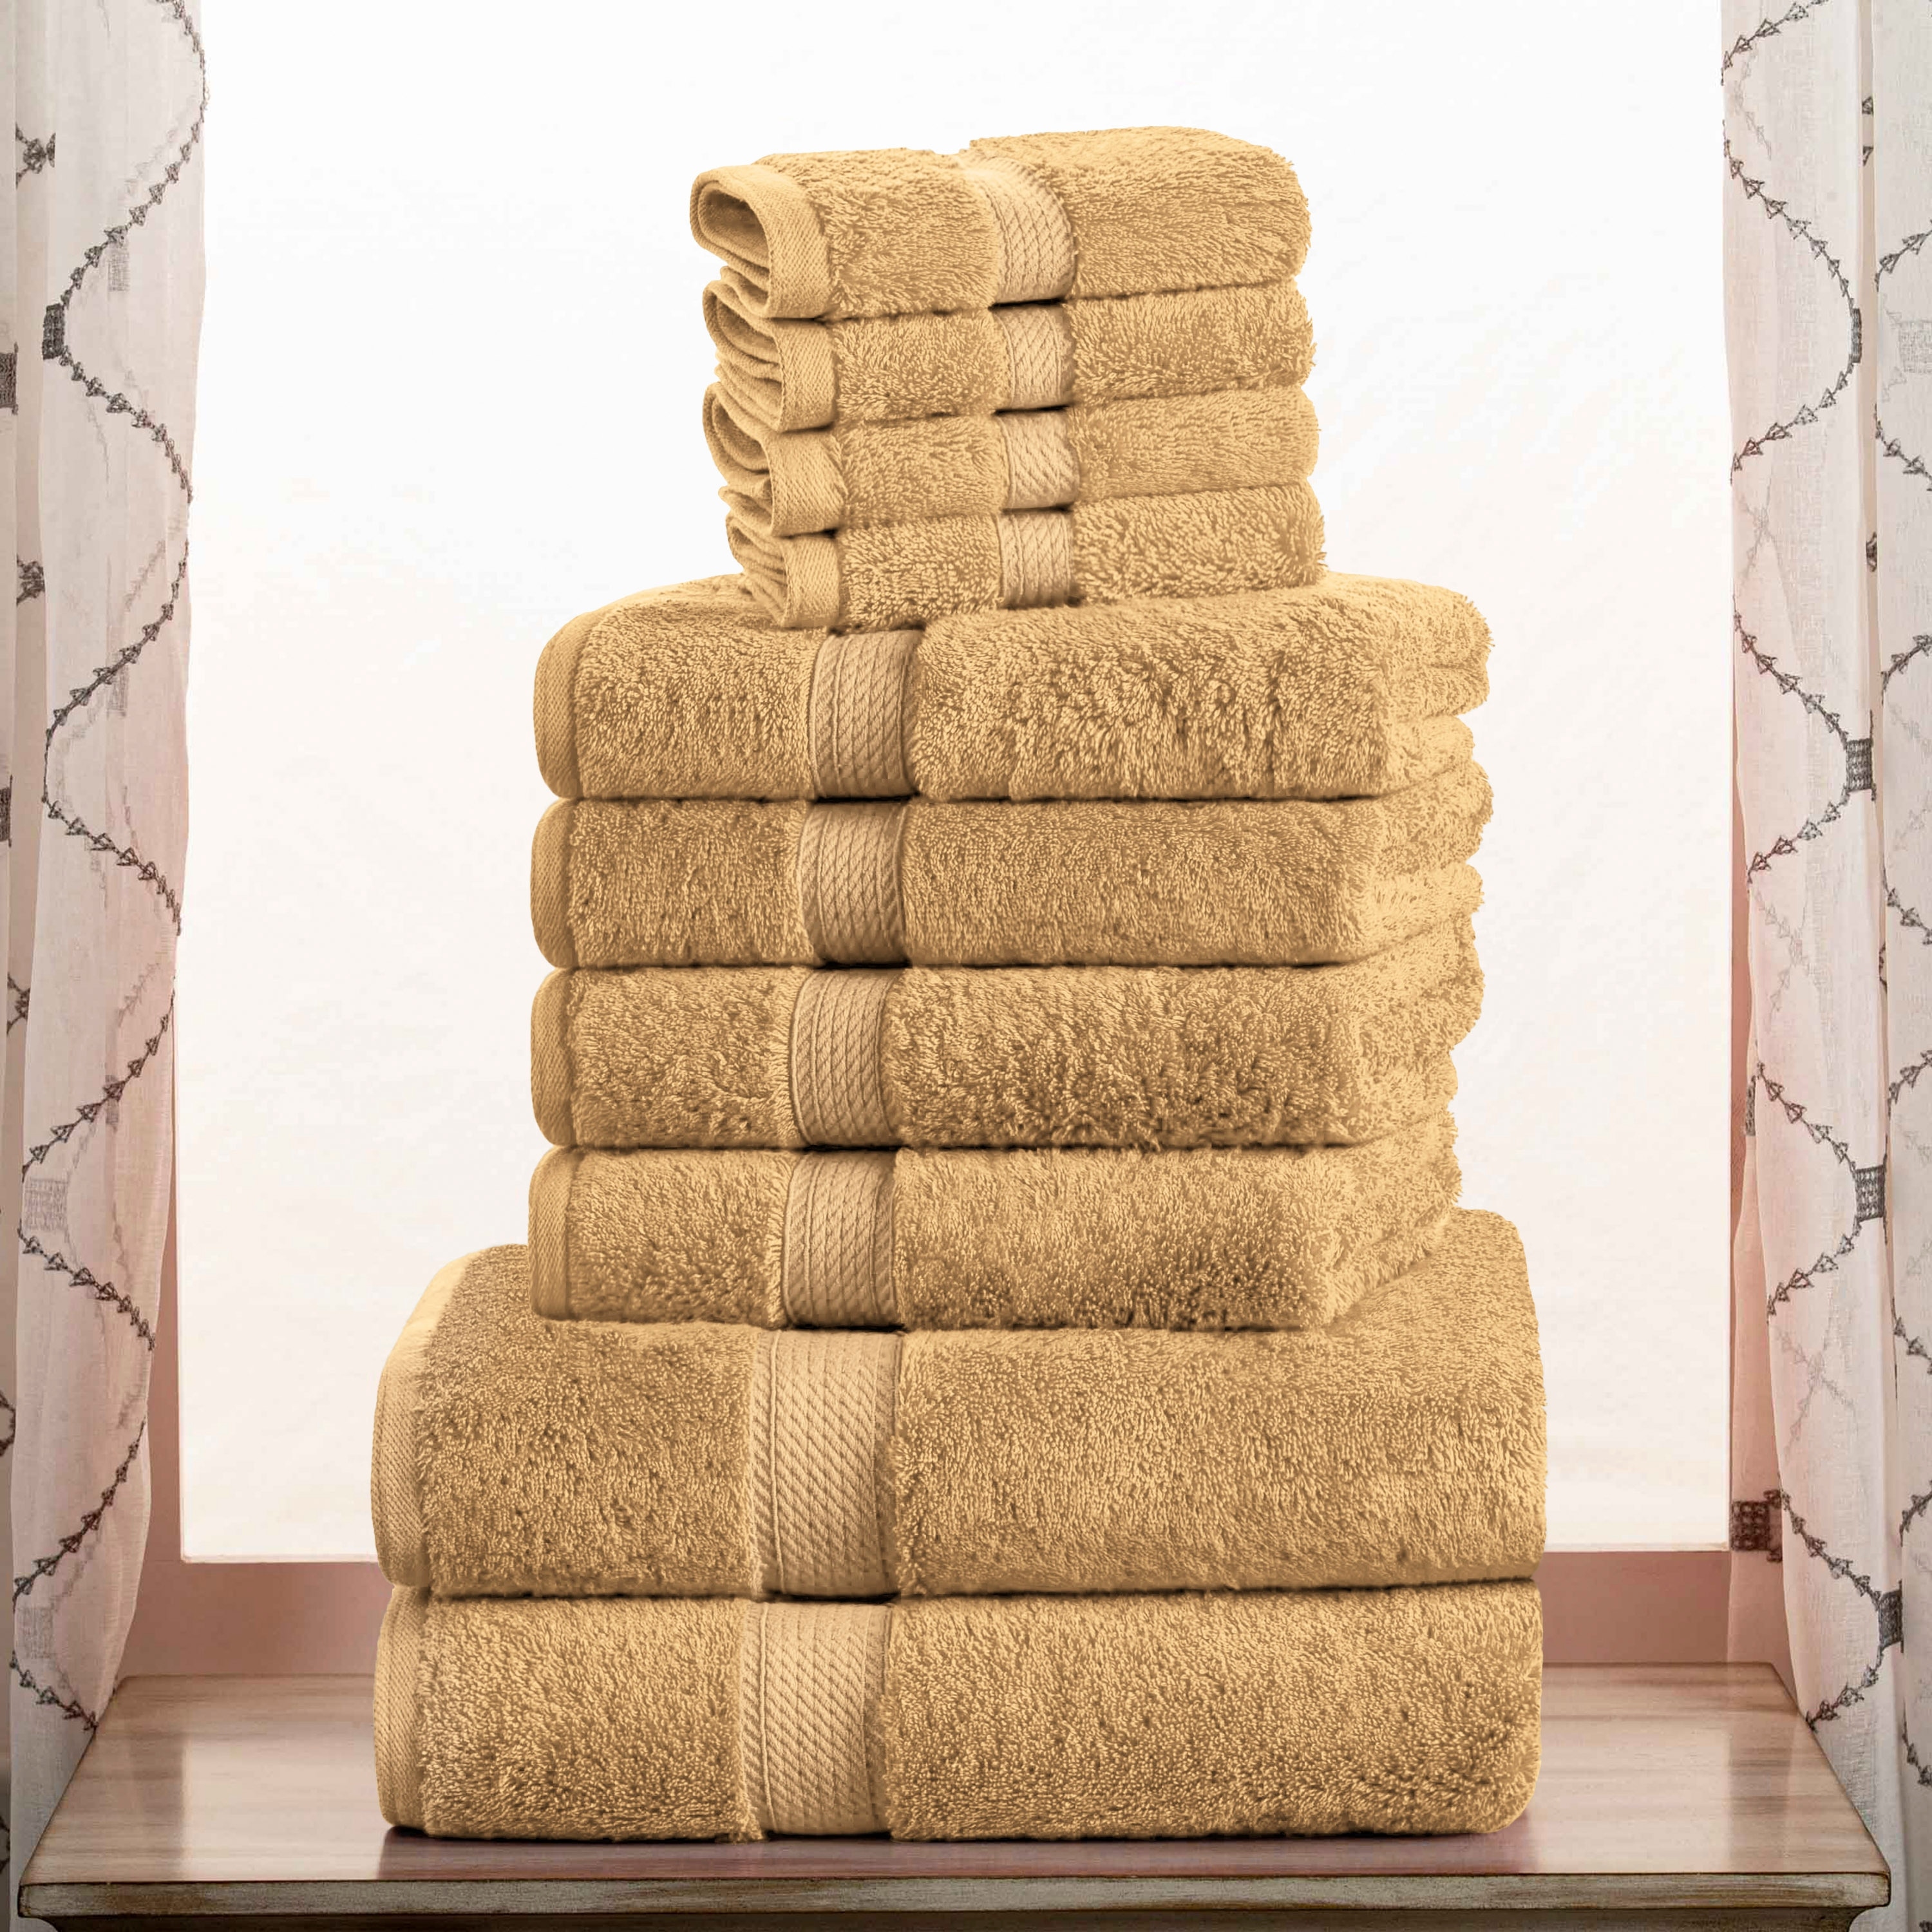 Superior Turkish Cotton 6 Piece Absorbent Heavyweight Towel Set - On Sale -  Bed Bath & Beyond - 9611436